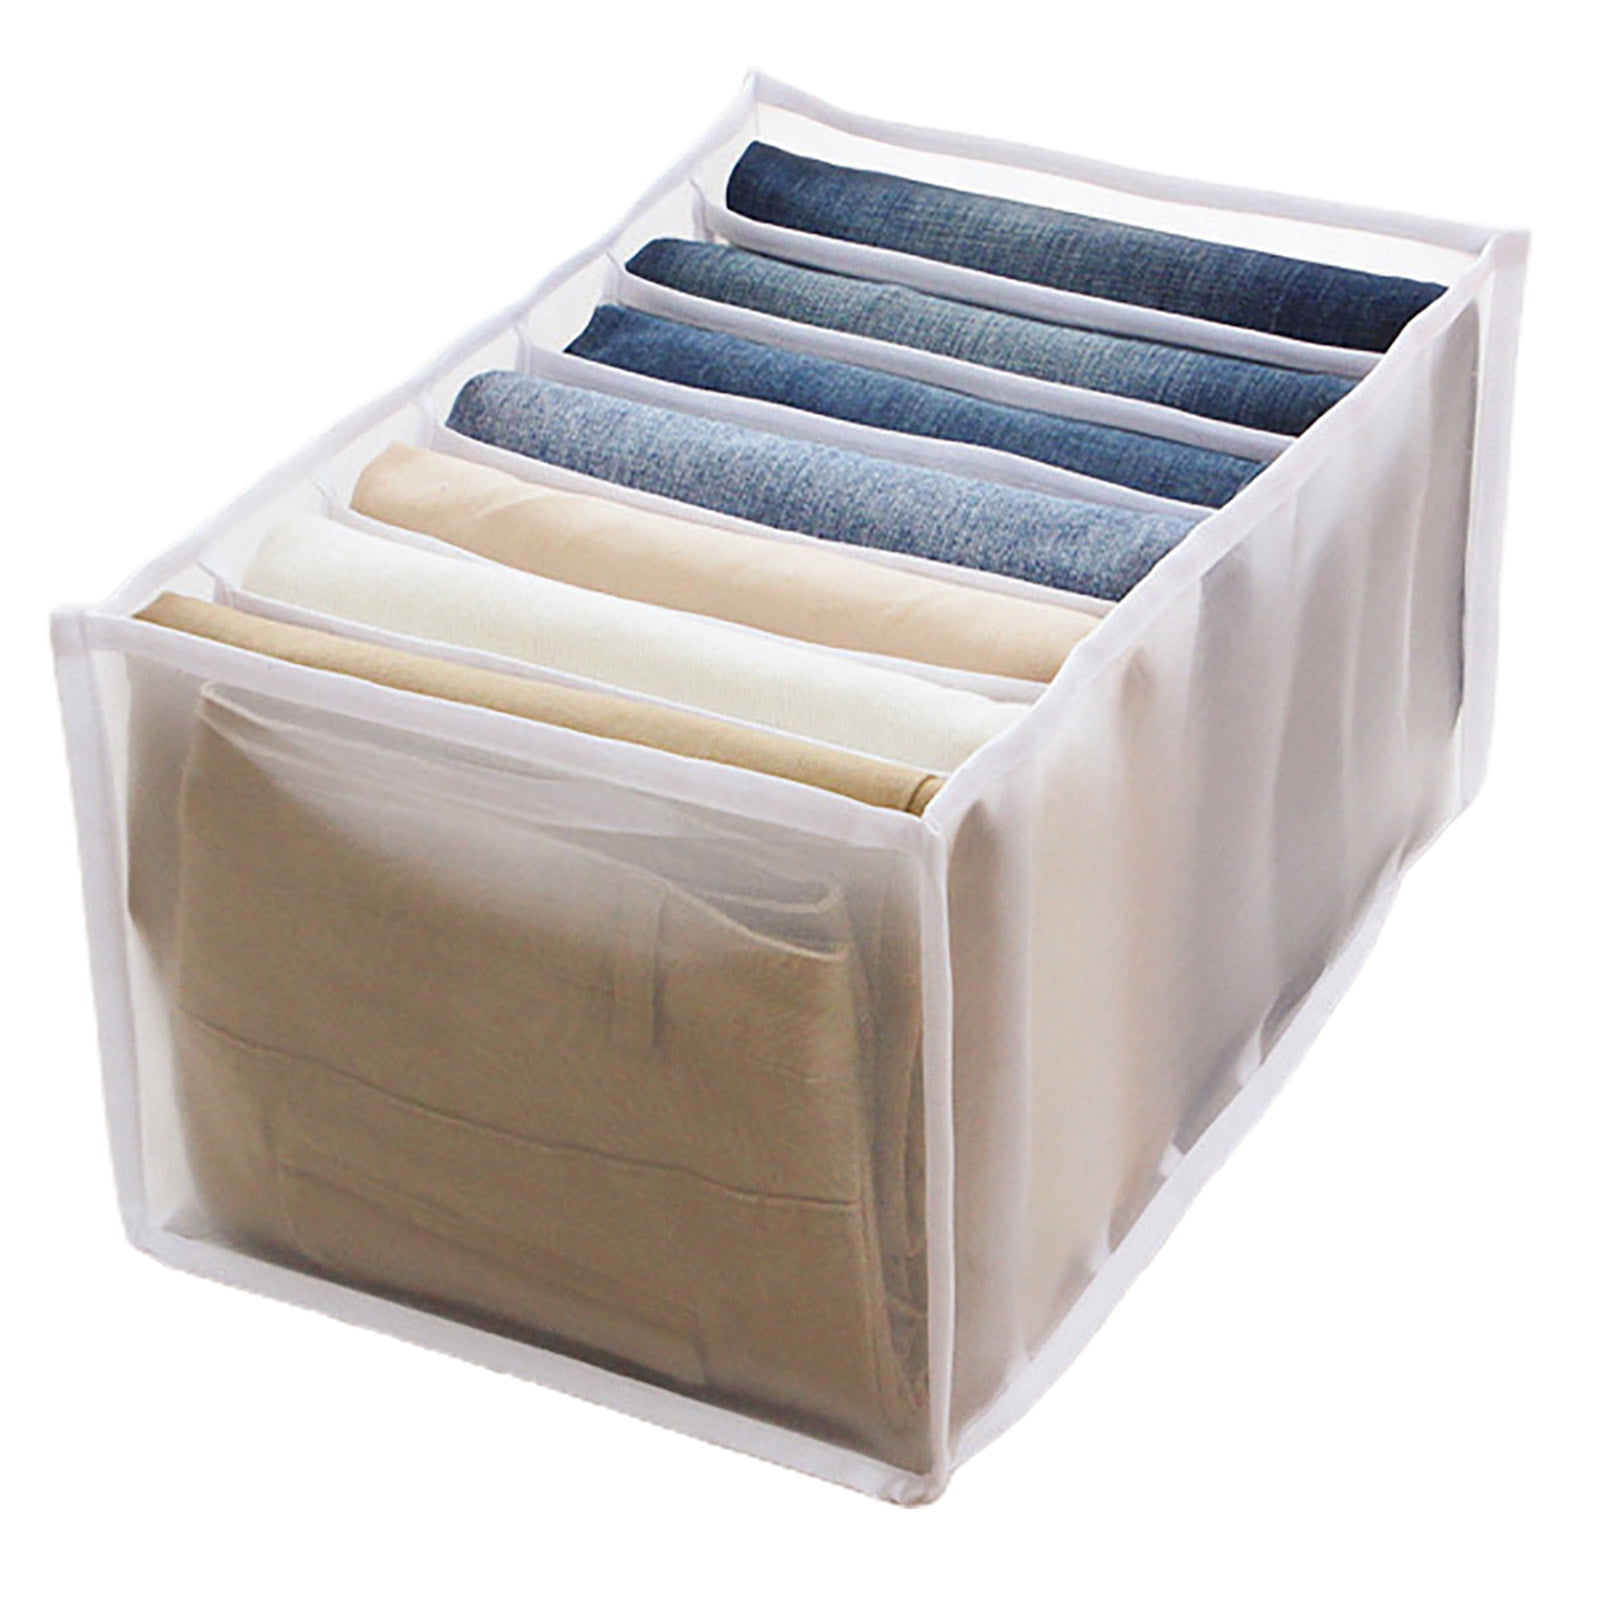 6 Pocket Foldable Storage Box With 3 Layer Shelf For Purse, Handbag, Door,  Sundry Hanger Orthopedics, Closet And More From Toubanmian, $10.93 |  DHgate.Com